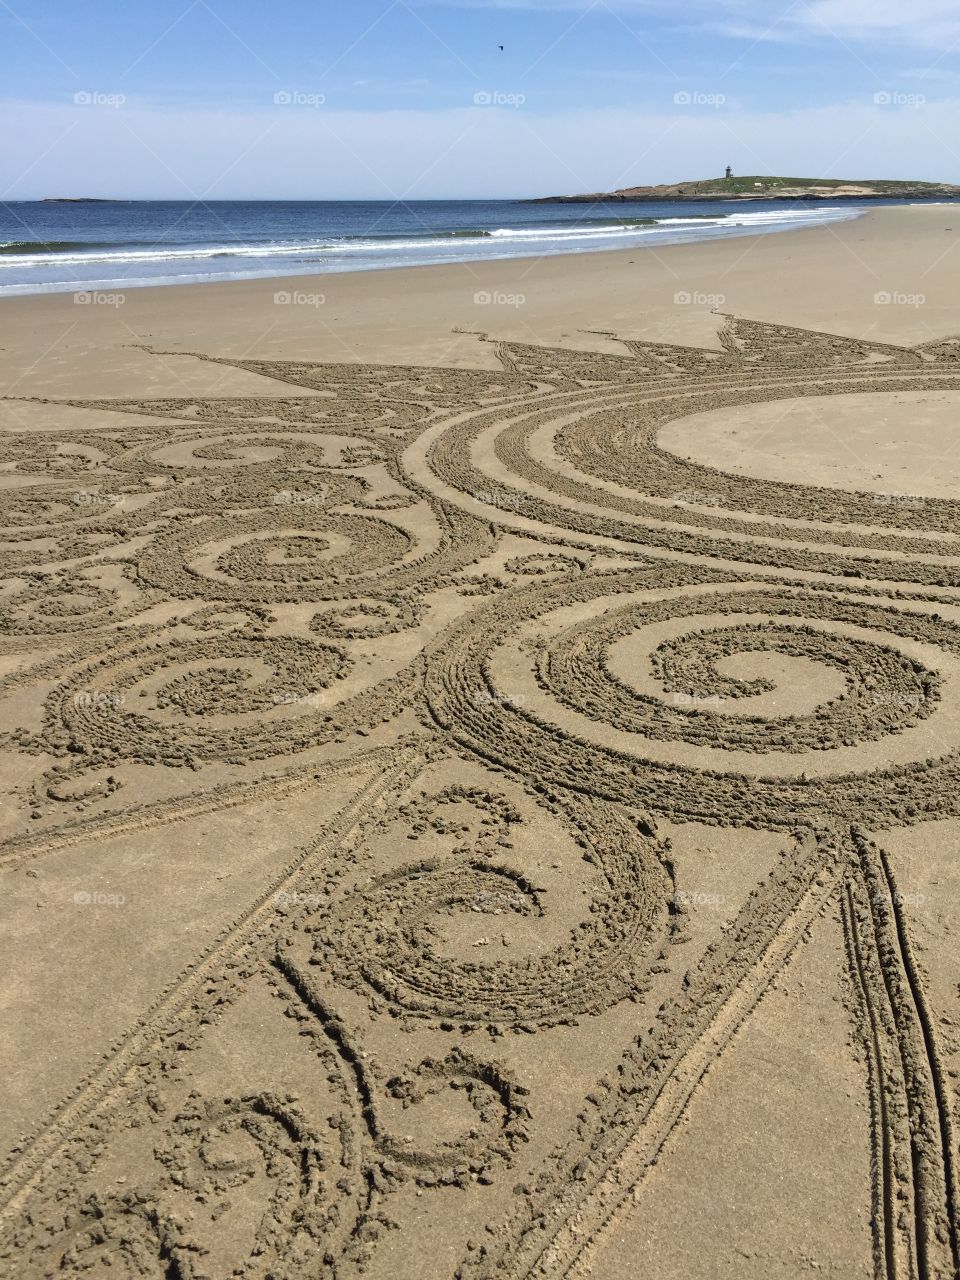 Sunshine artwork scrolled in the sand at Popham Beach in Phippsburg Maine USA. Artwork by Kathy Lambert. 